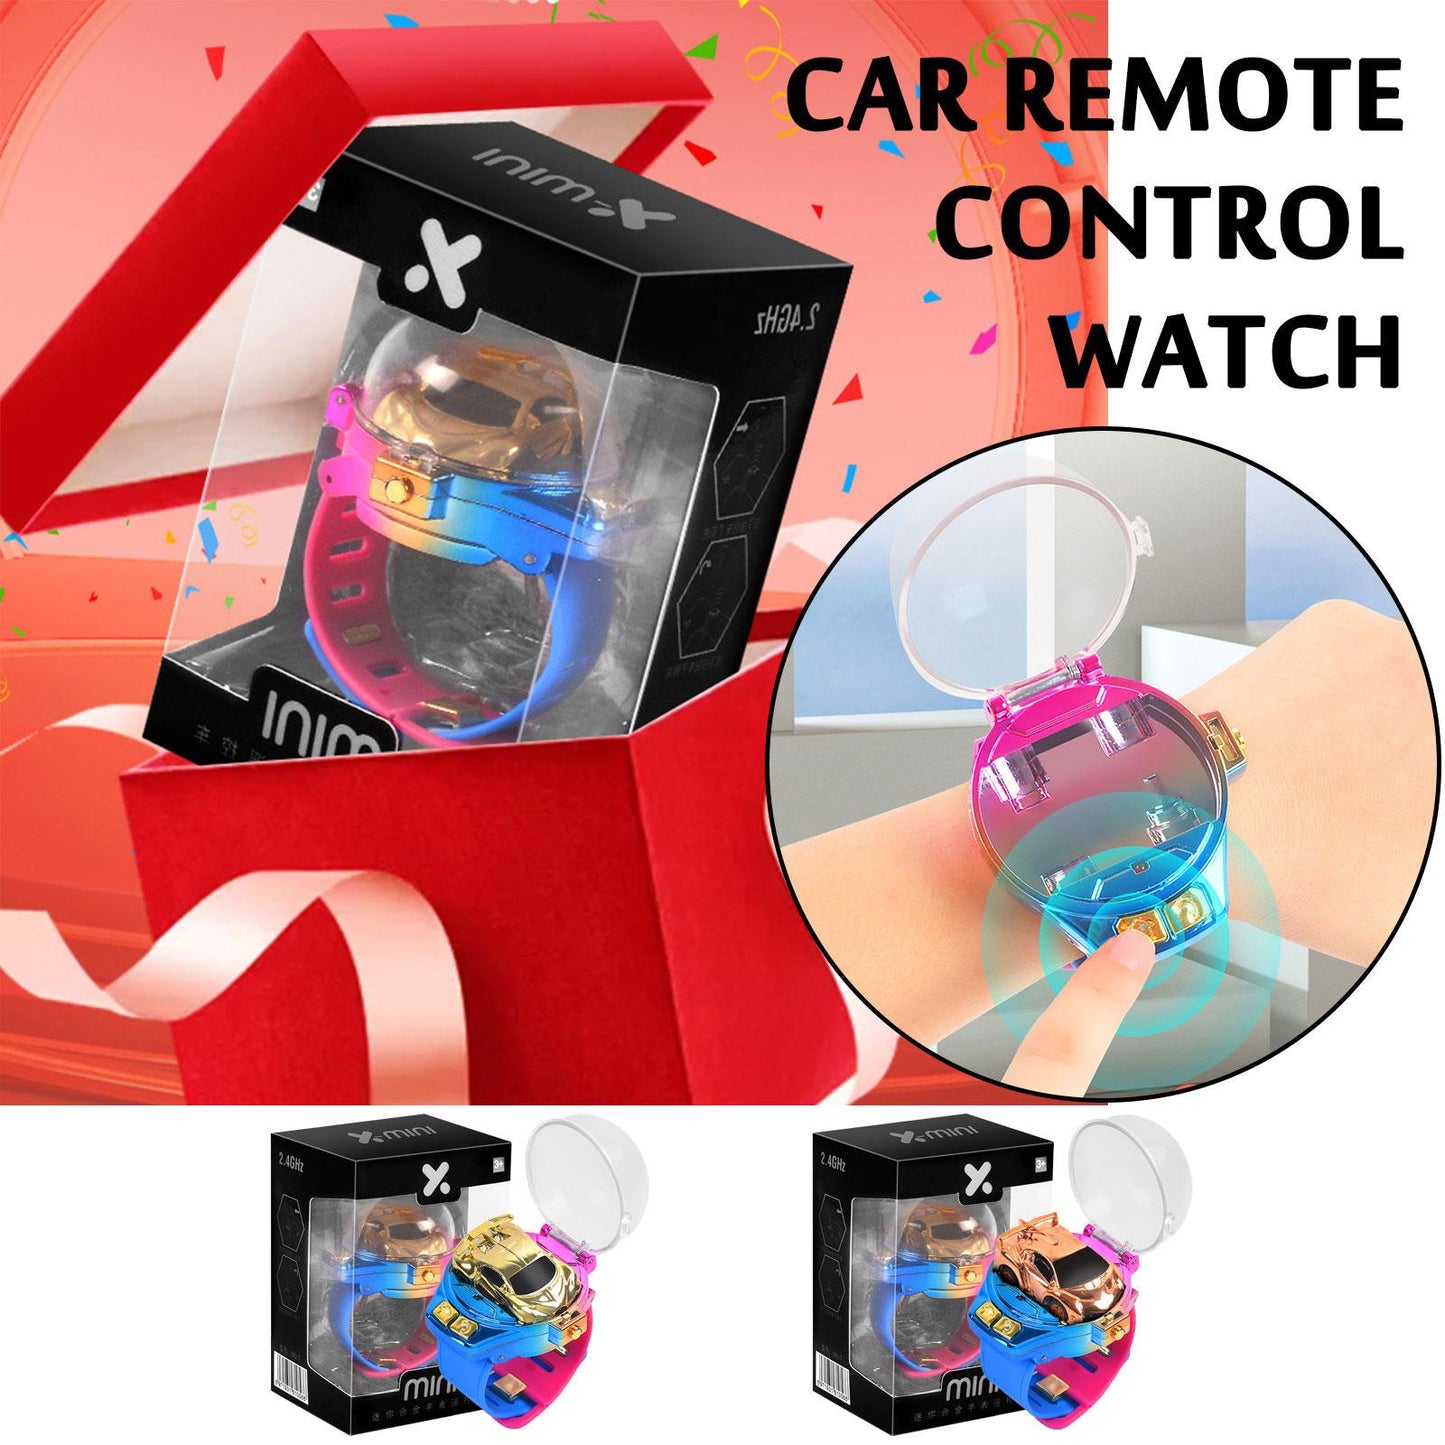 kids car watch control